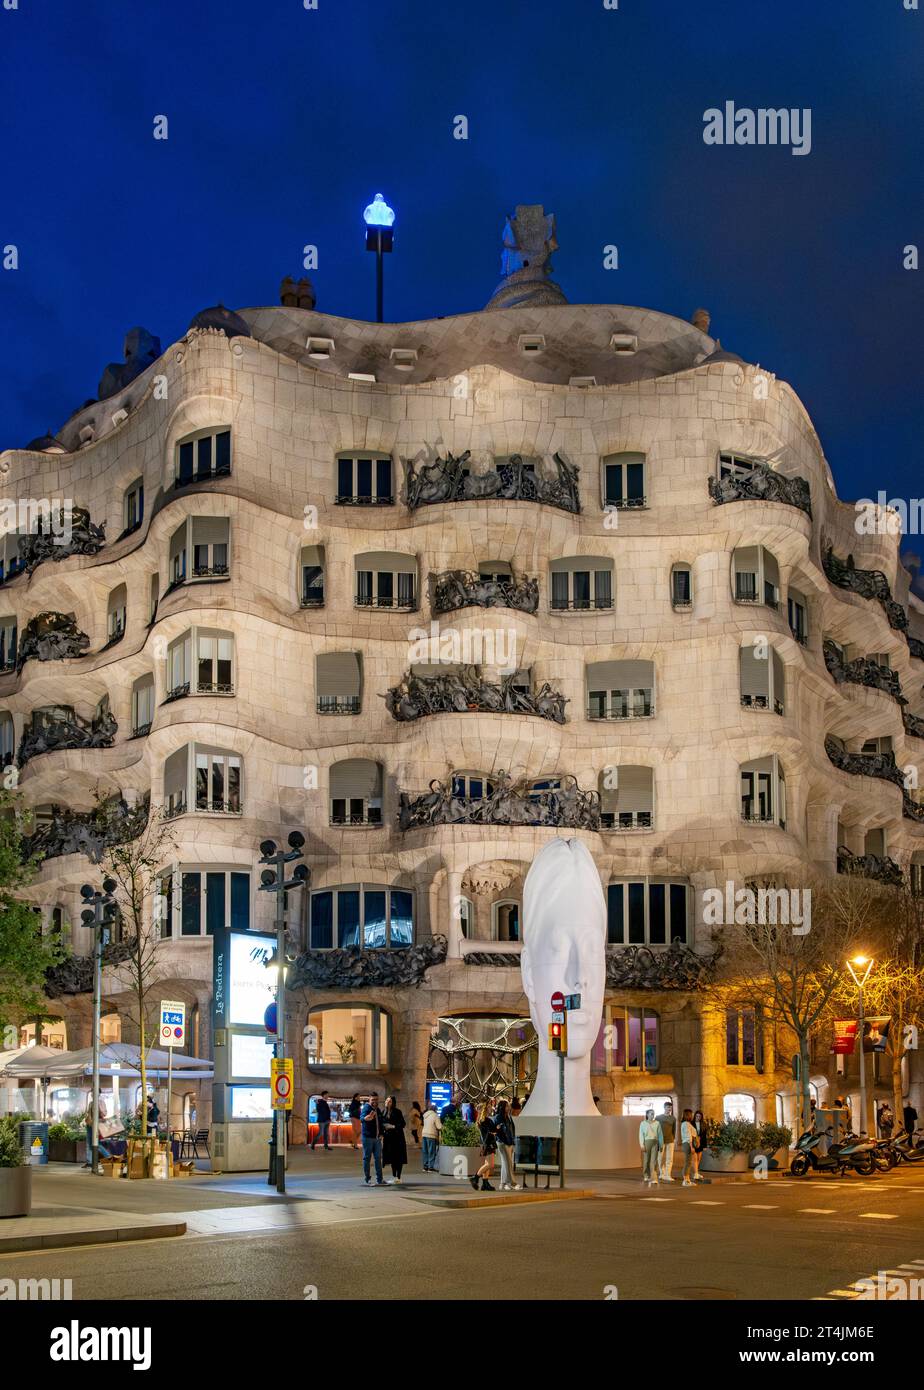 Casa Mila - La Pedrera at night, Barcelona, Spain Stock Photo